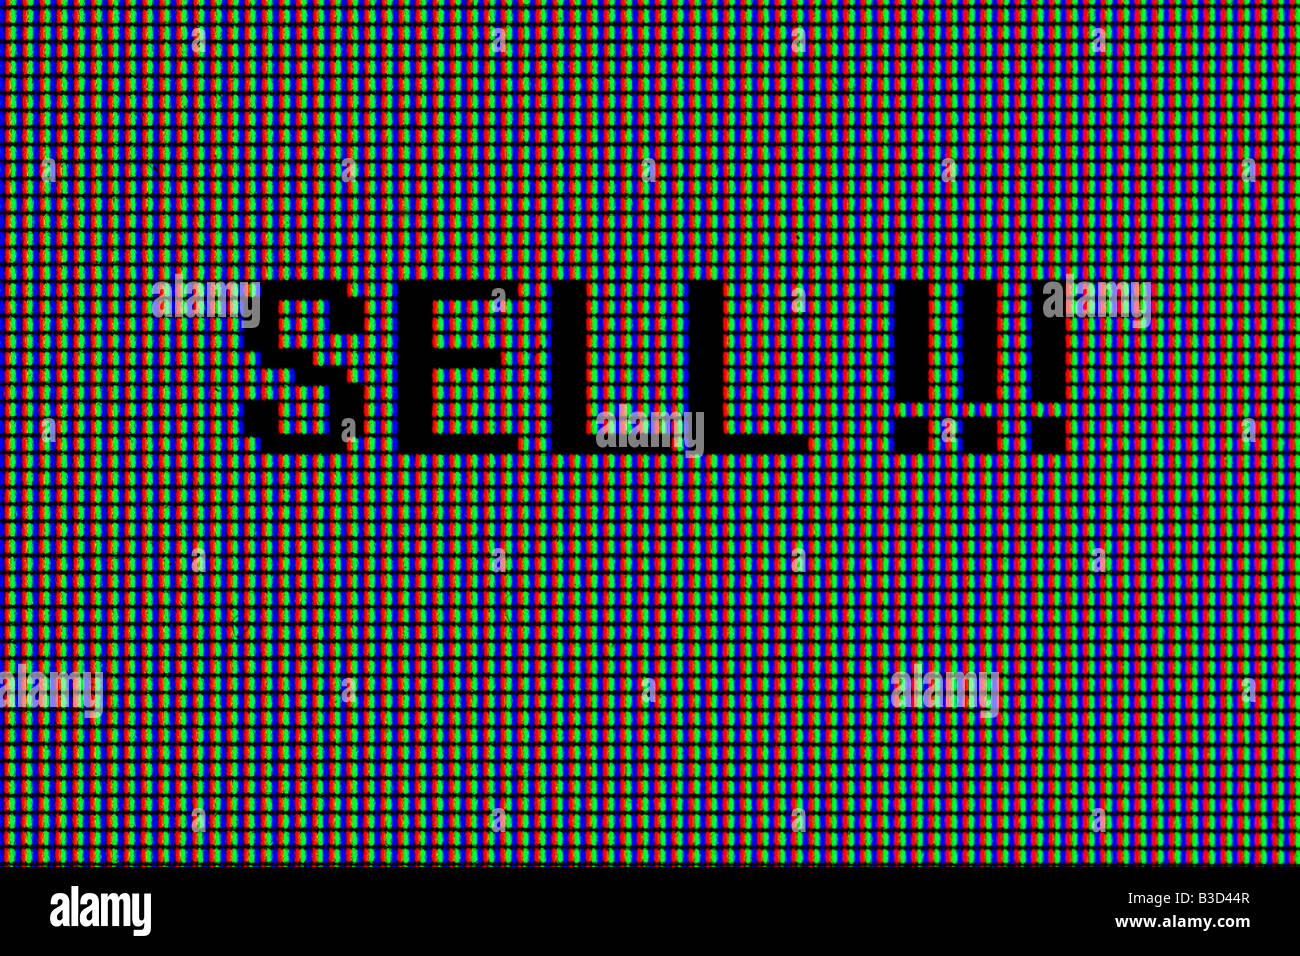 SELL extreme macro shot of a LCD computer monitor, RGB pixels visible Stock Photo